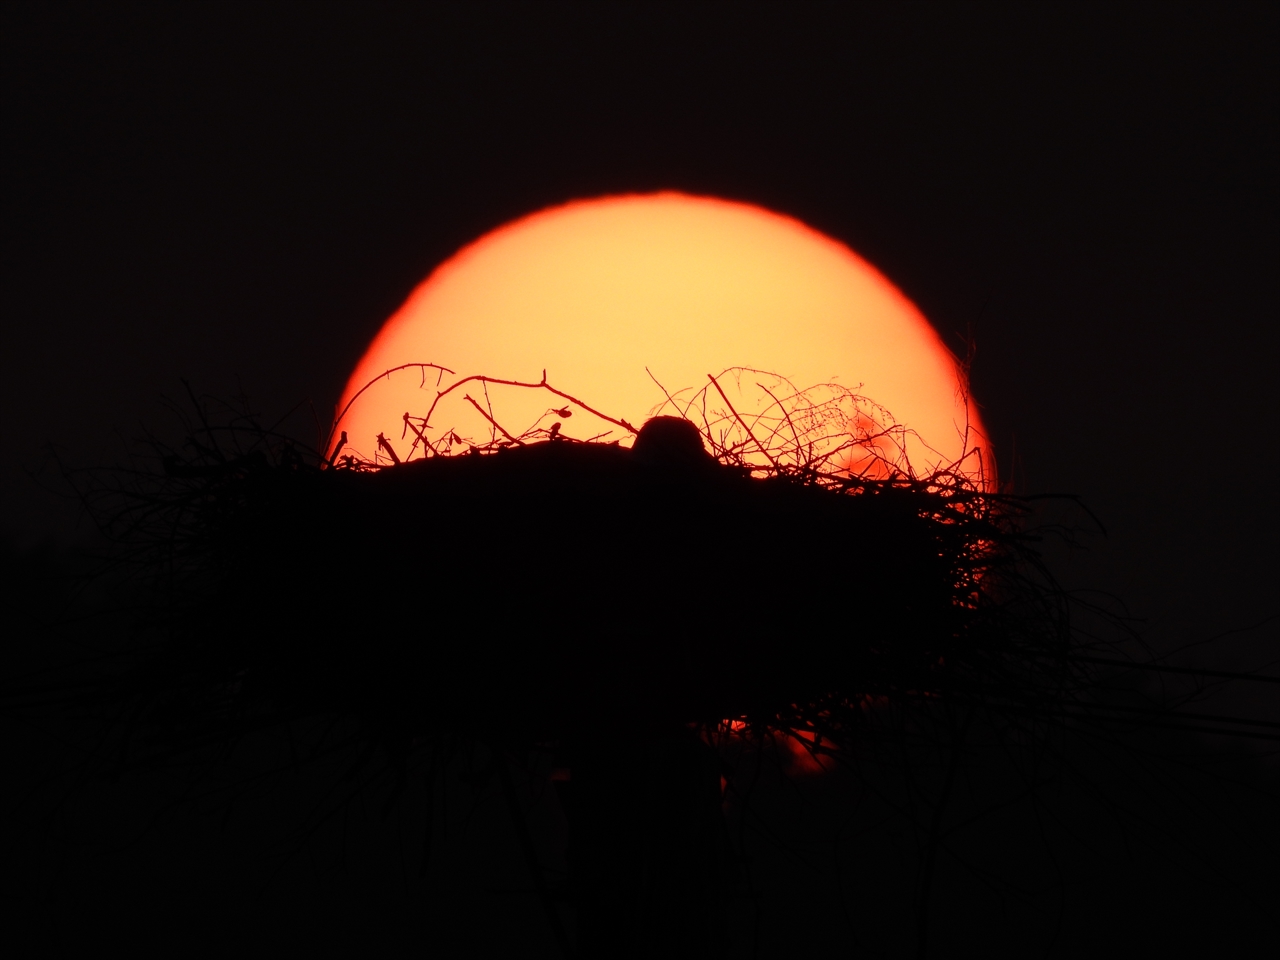 DSCN9769朝陽とコウノトリ巣塔、２０２１年３月１５日AM６：３８